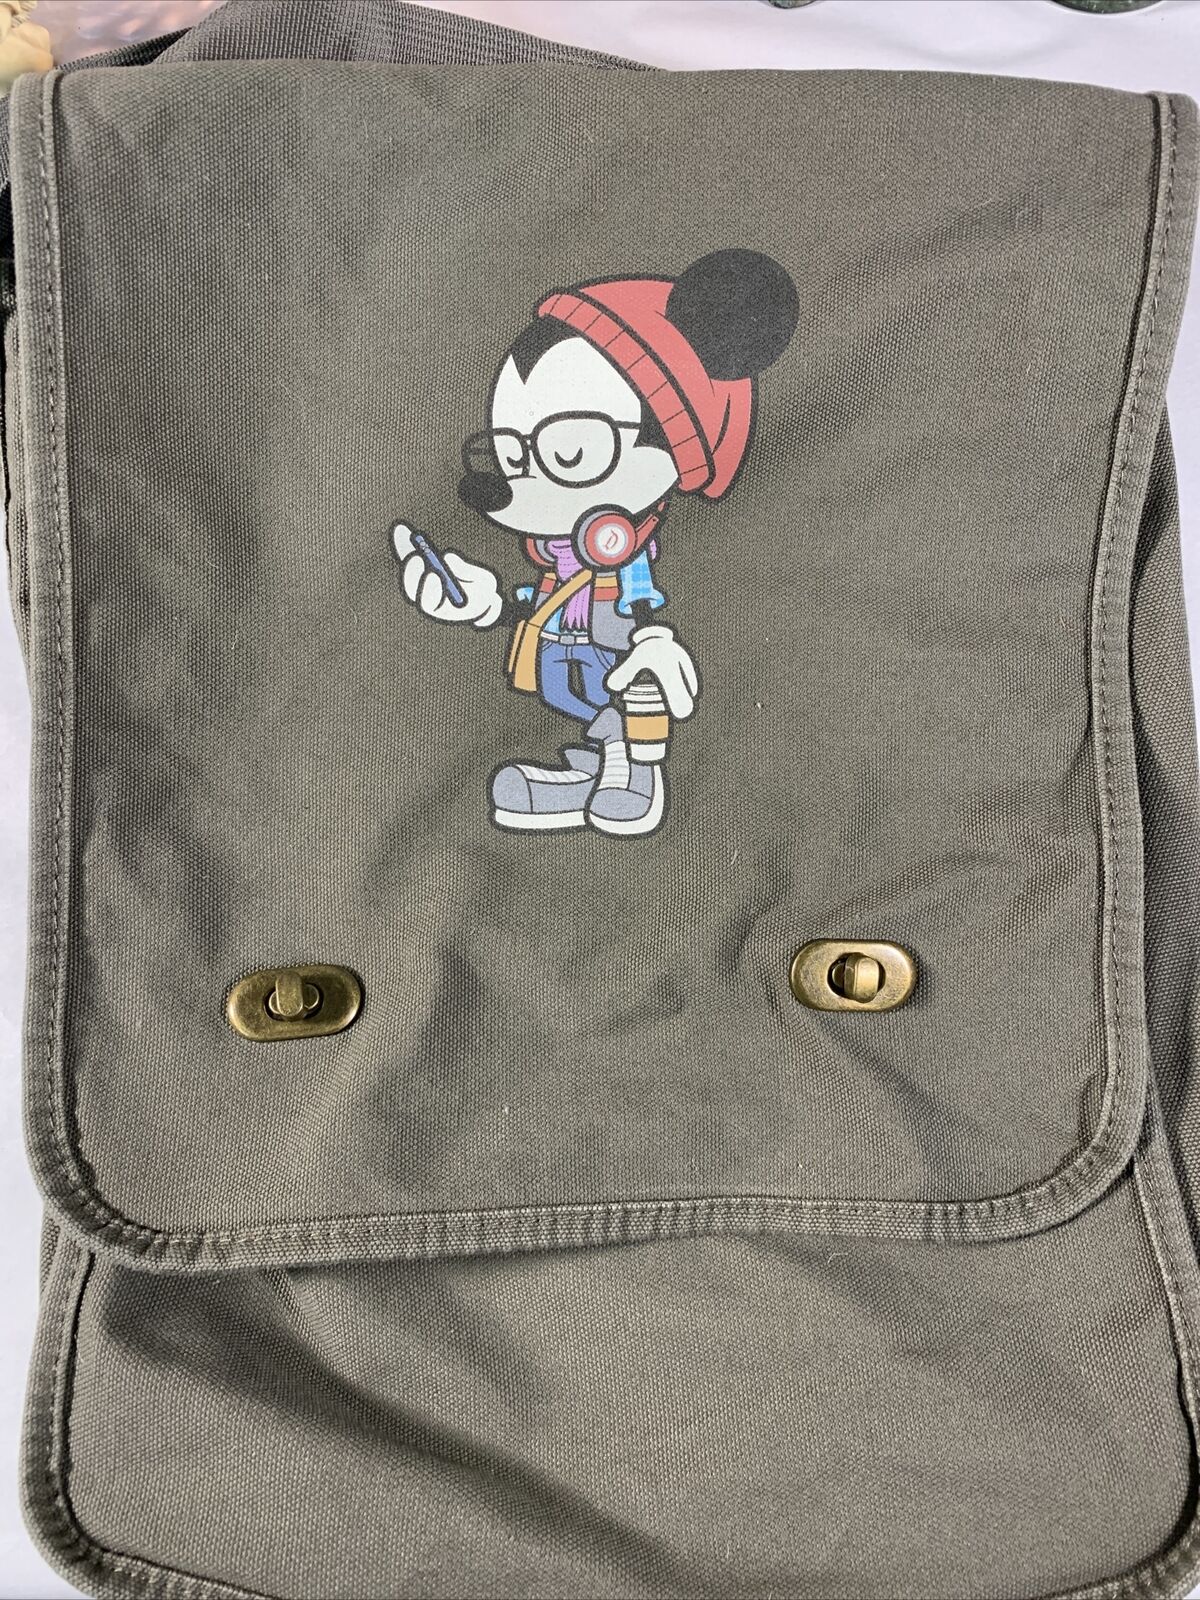 Disney WonderGround Gallery Hipster Mickey Mouse Messenger Bag Khaki Green -Mint